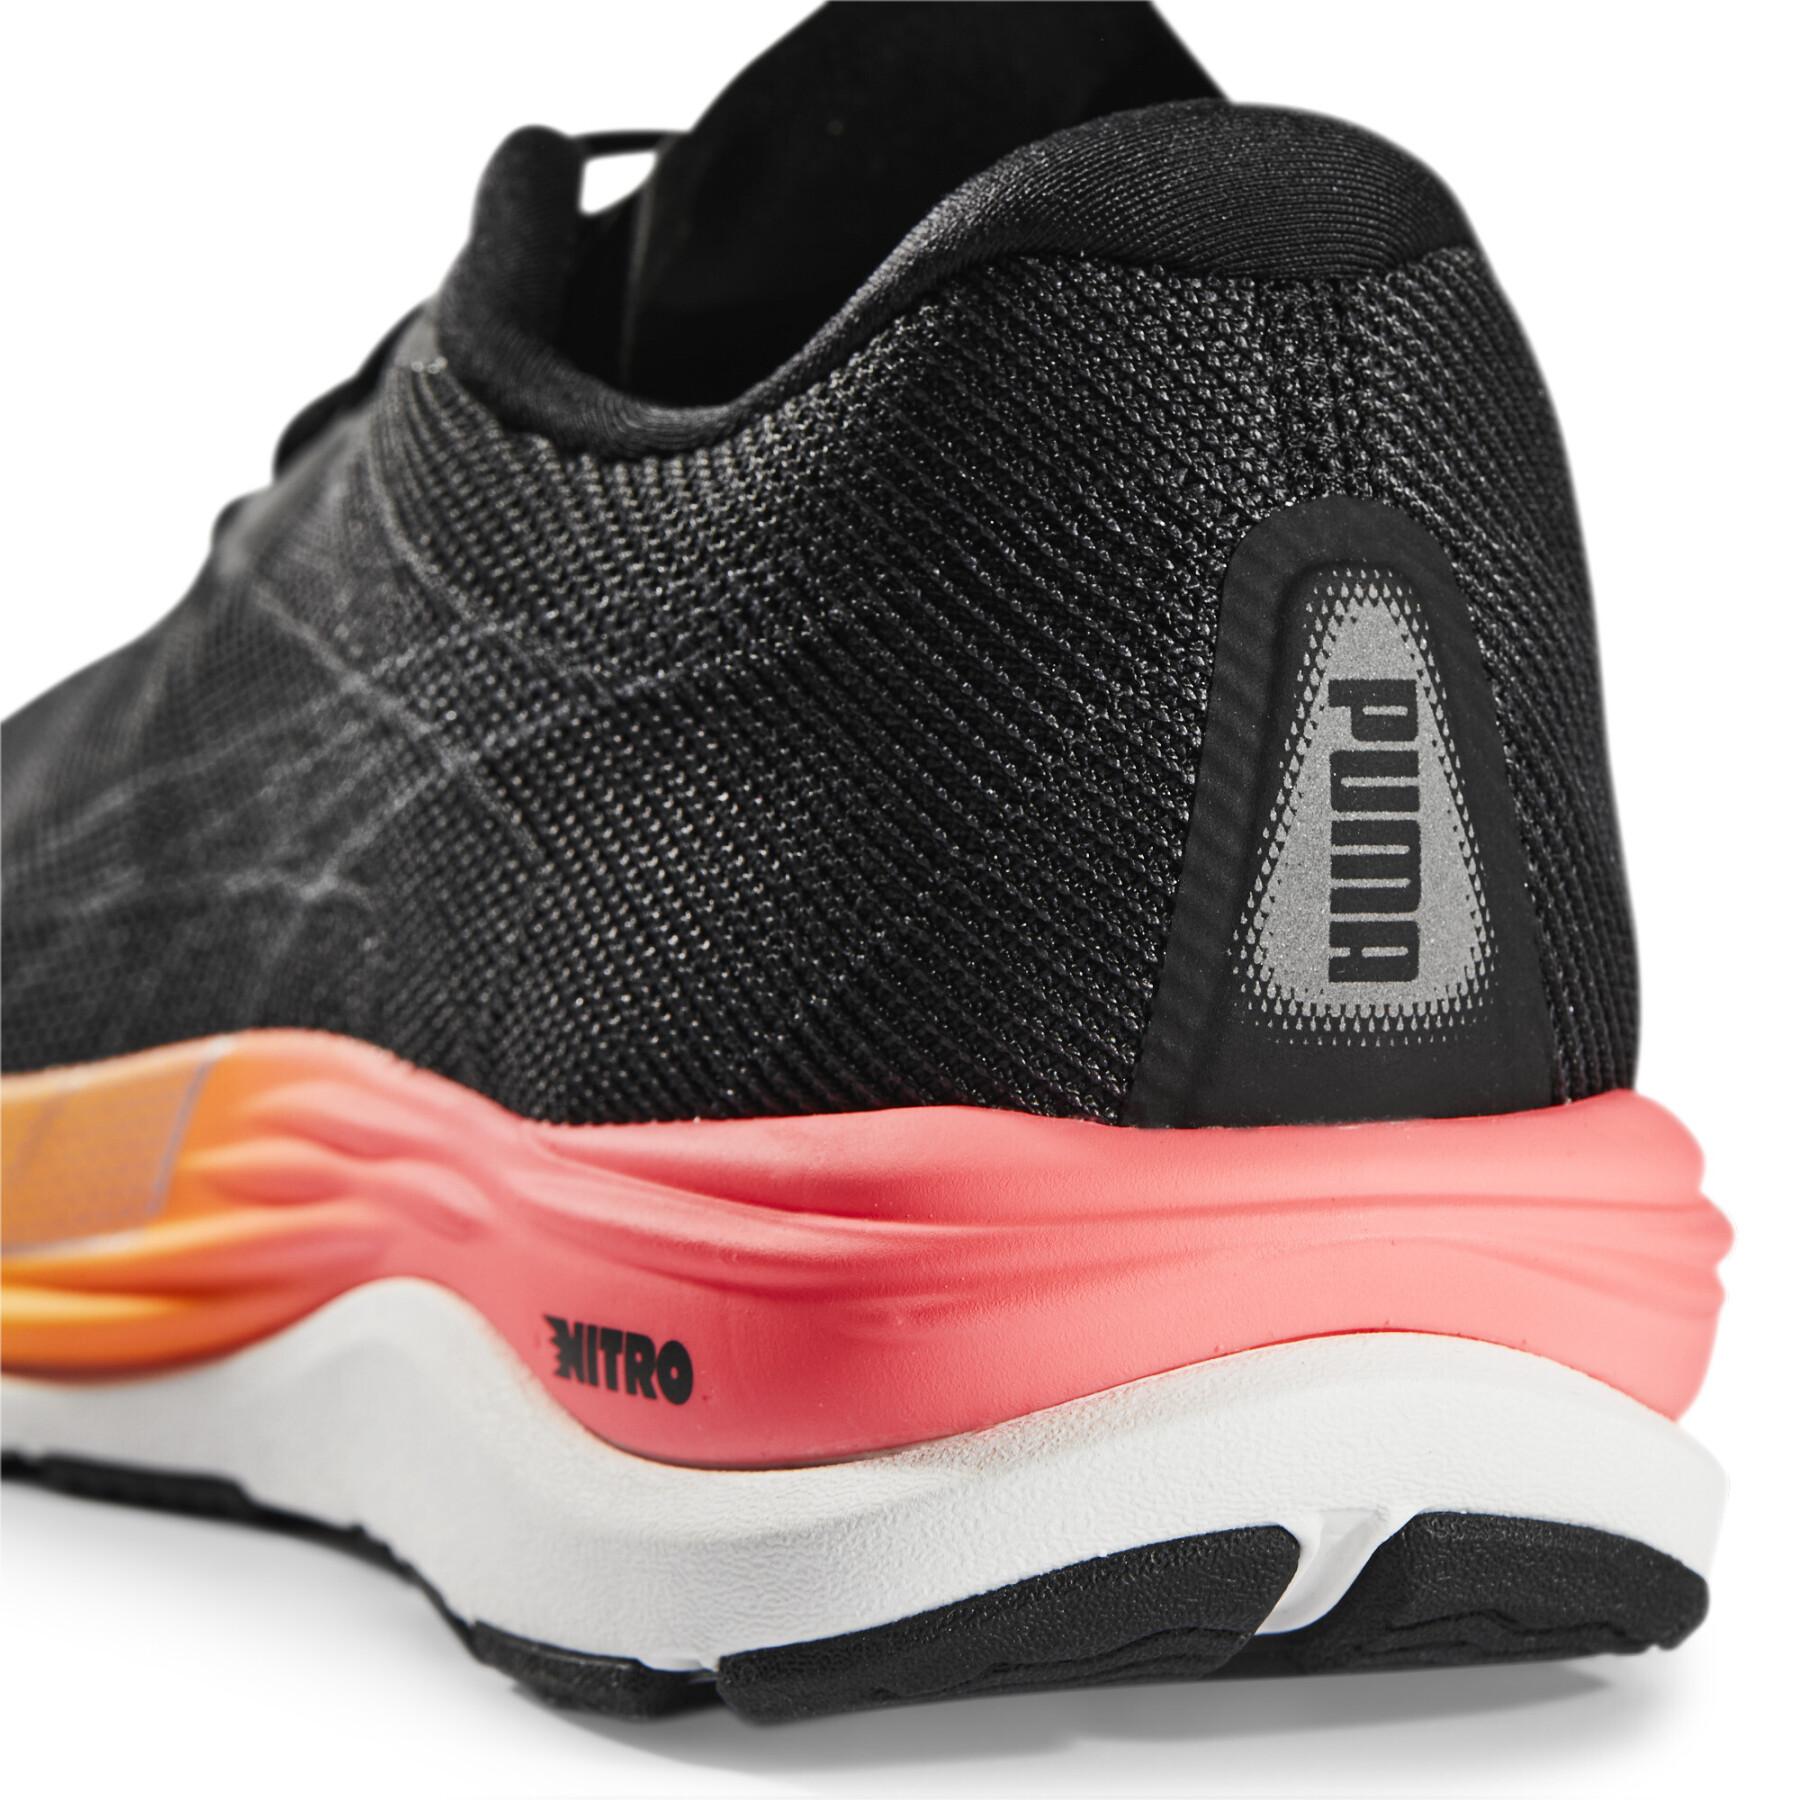 Schuhe Puma Velocity Nitro 2